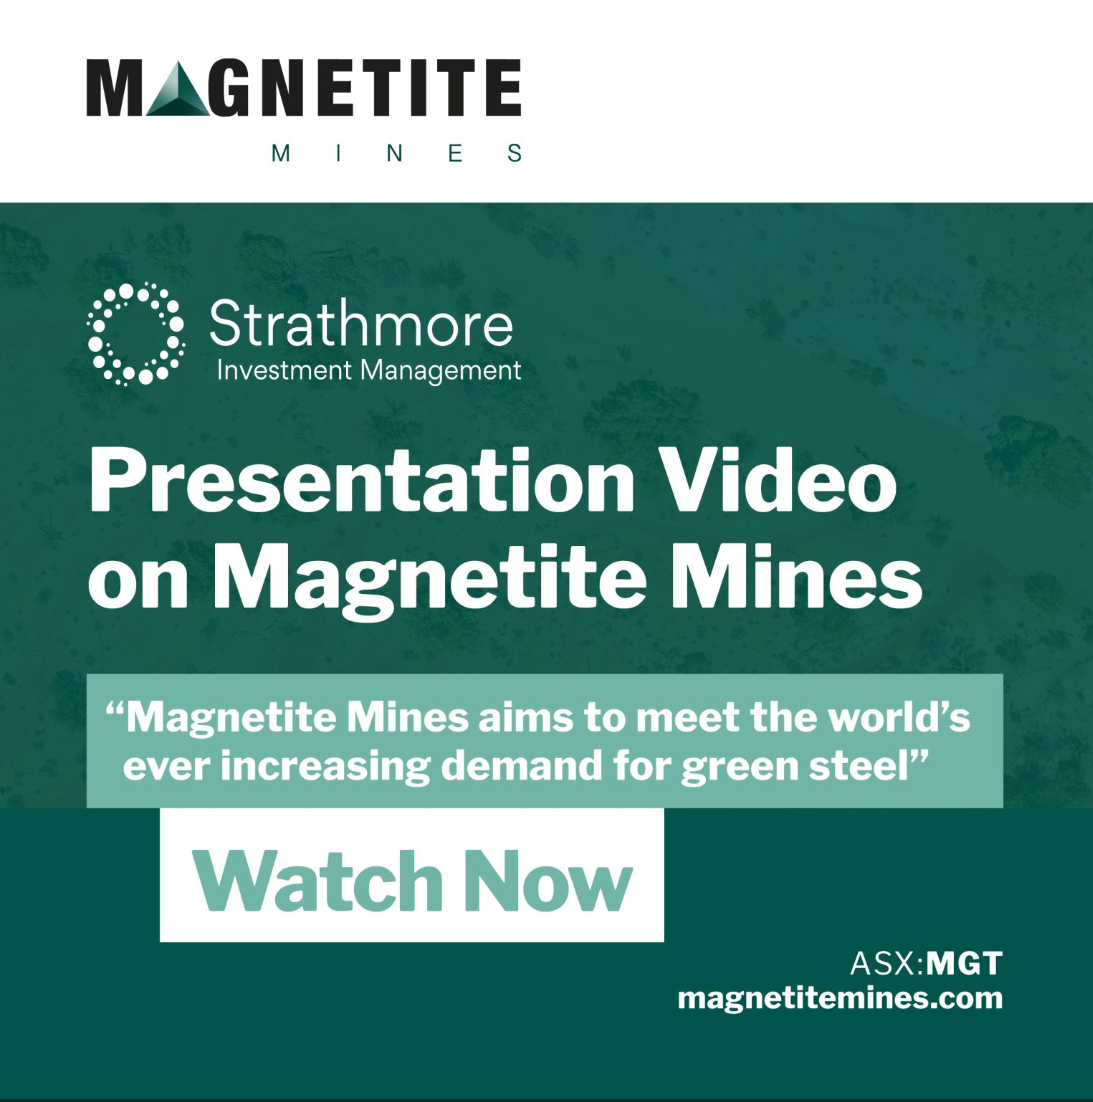 Strathmore Investment Management – Presentation Video on Magnetite Mines